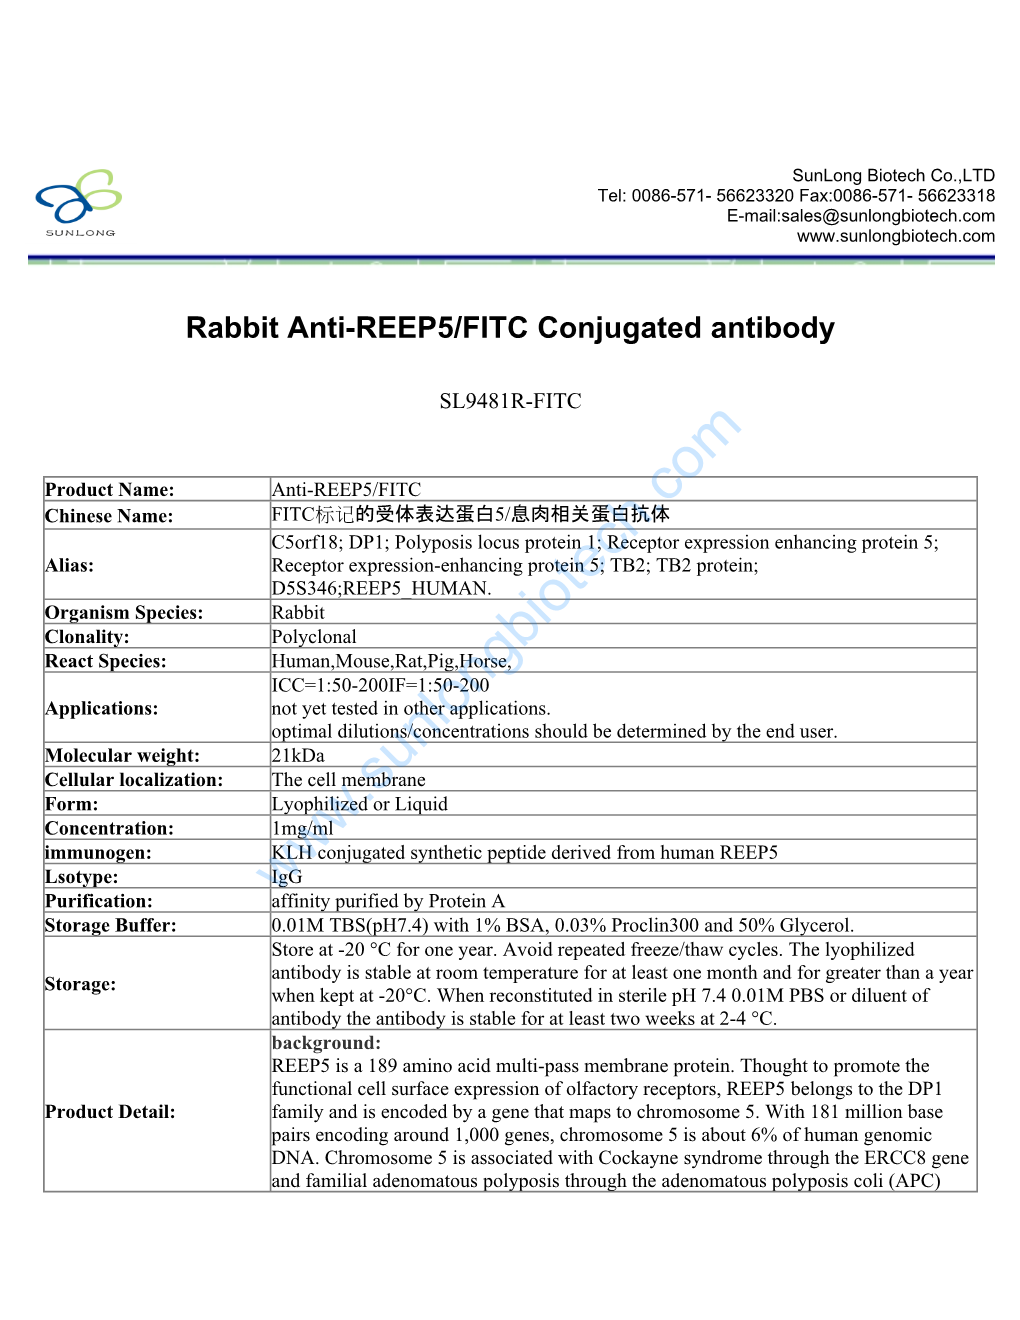 Rabbit Anti-REEP5/FITC Conjugated Antibody